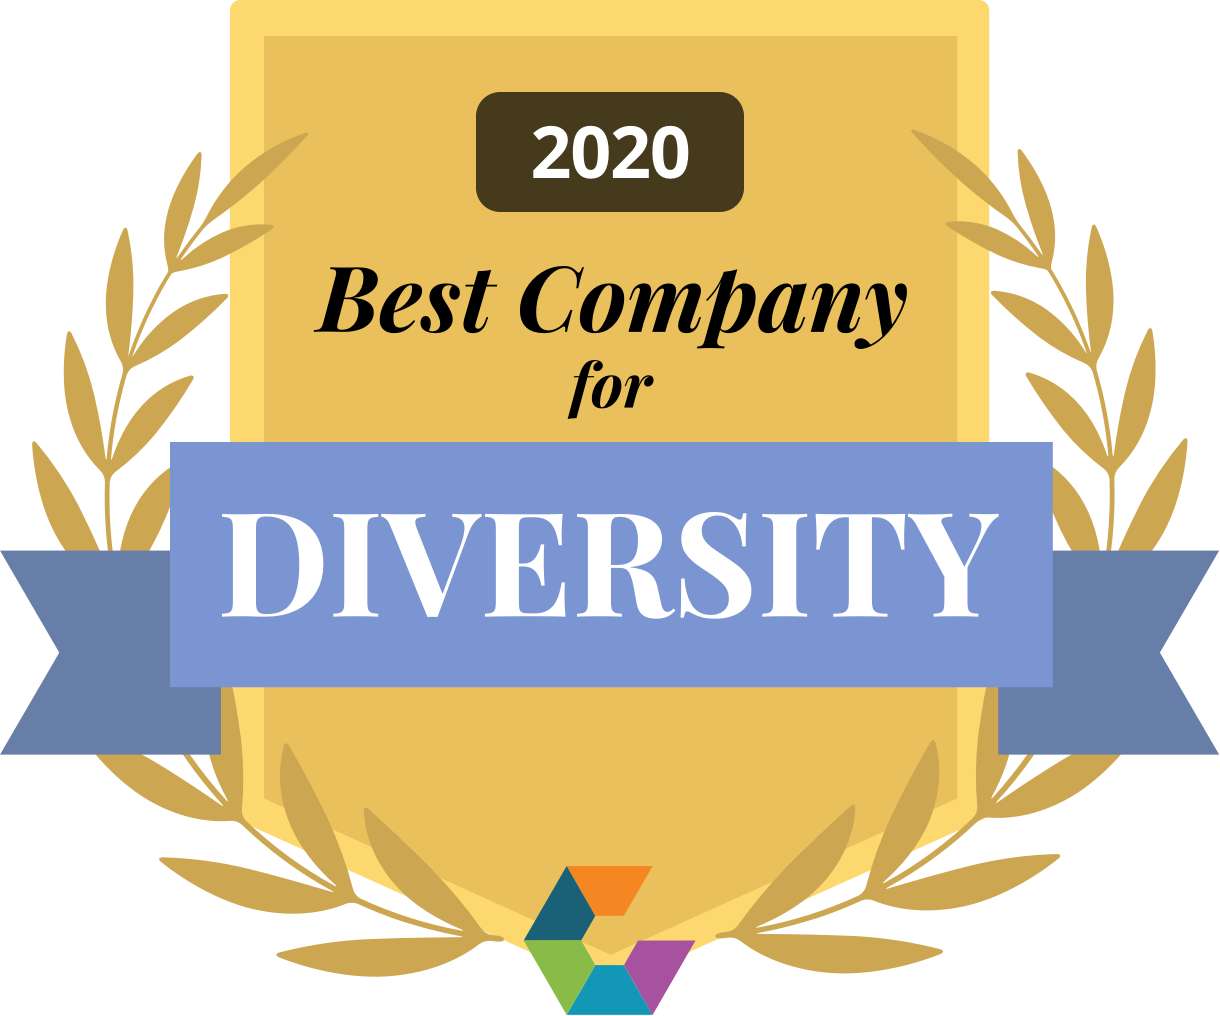 2020 Best Company for Diversity award logo from Comparably